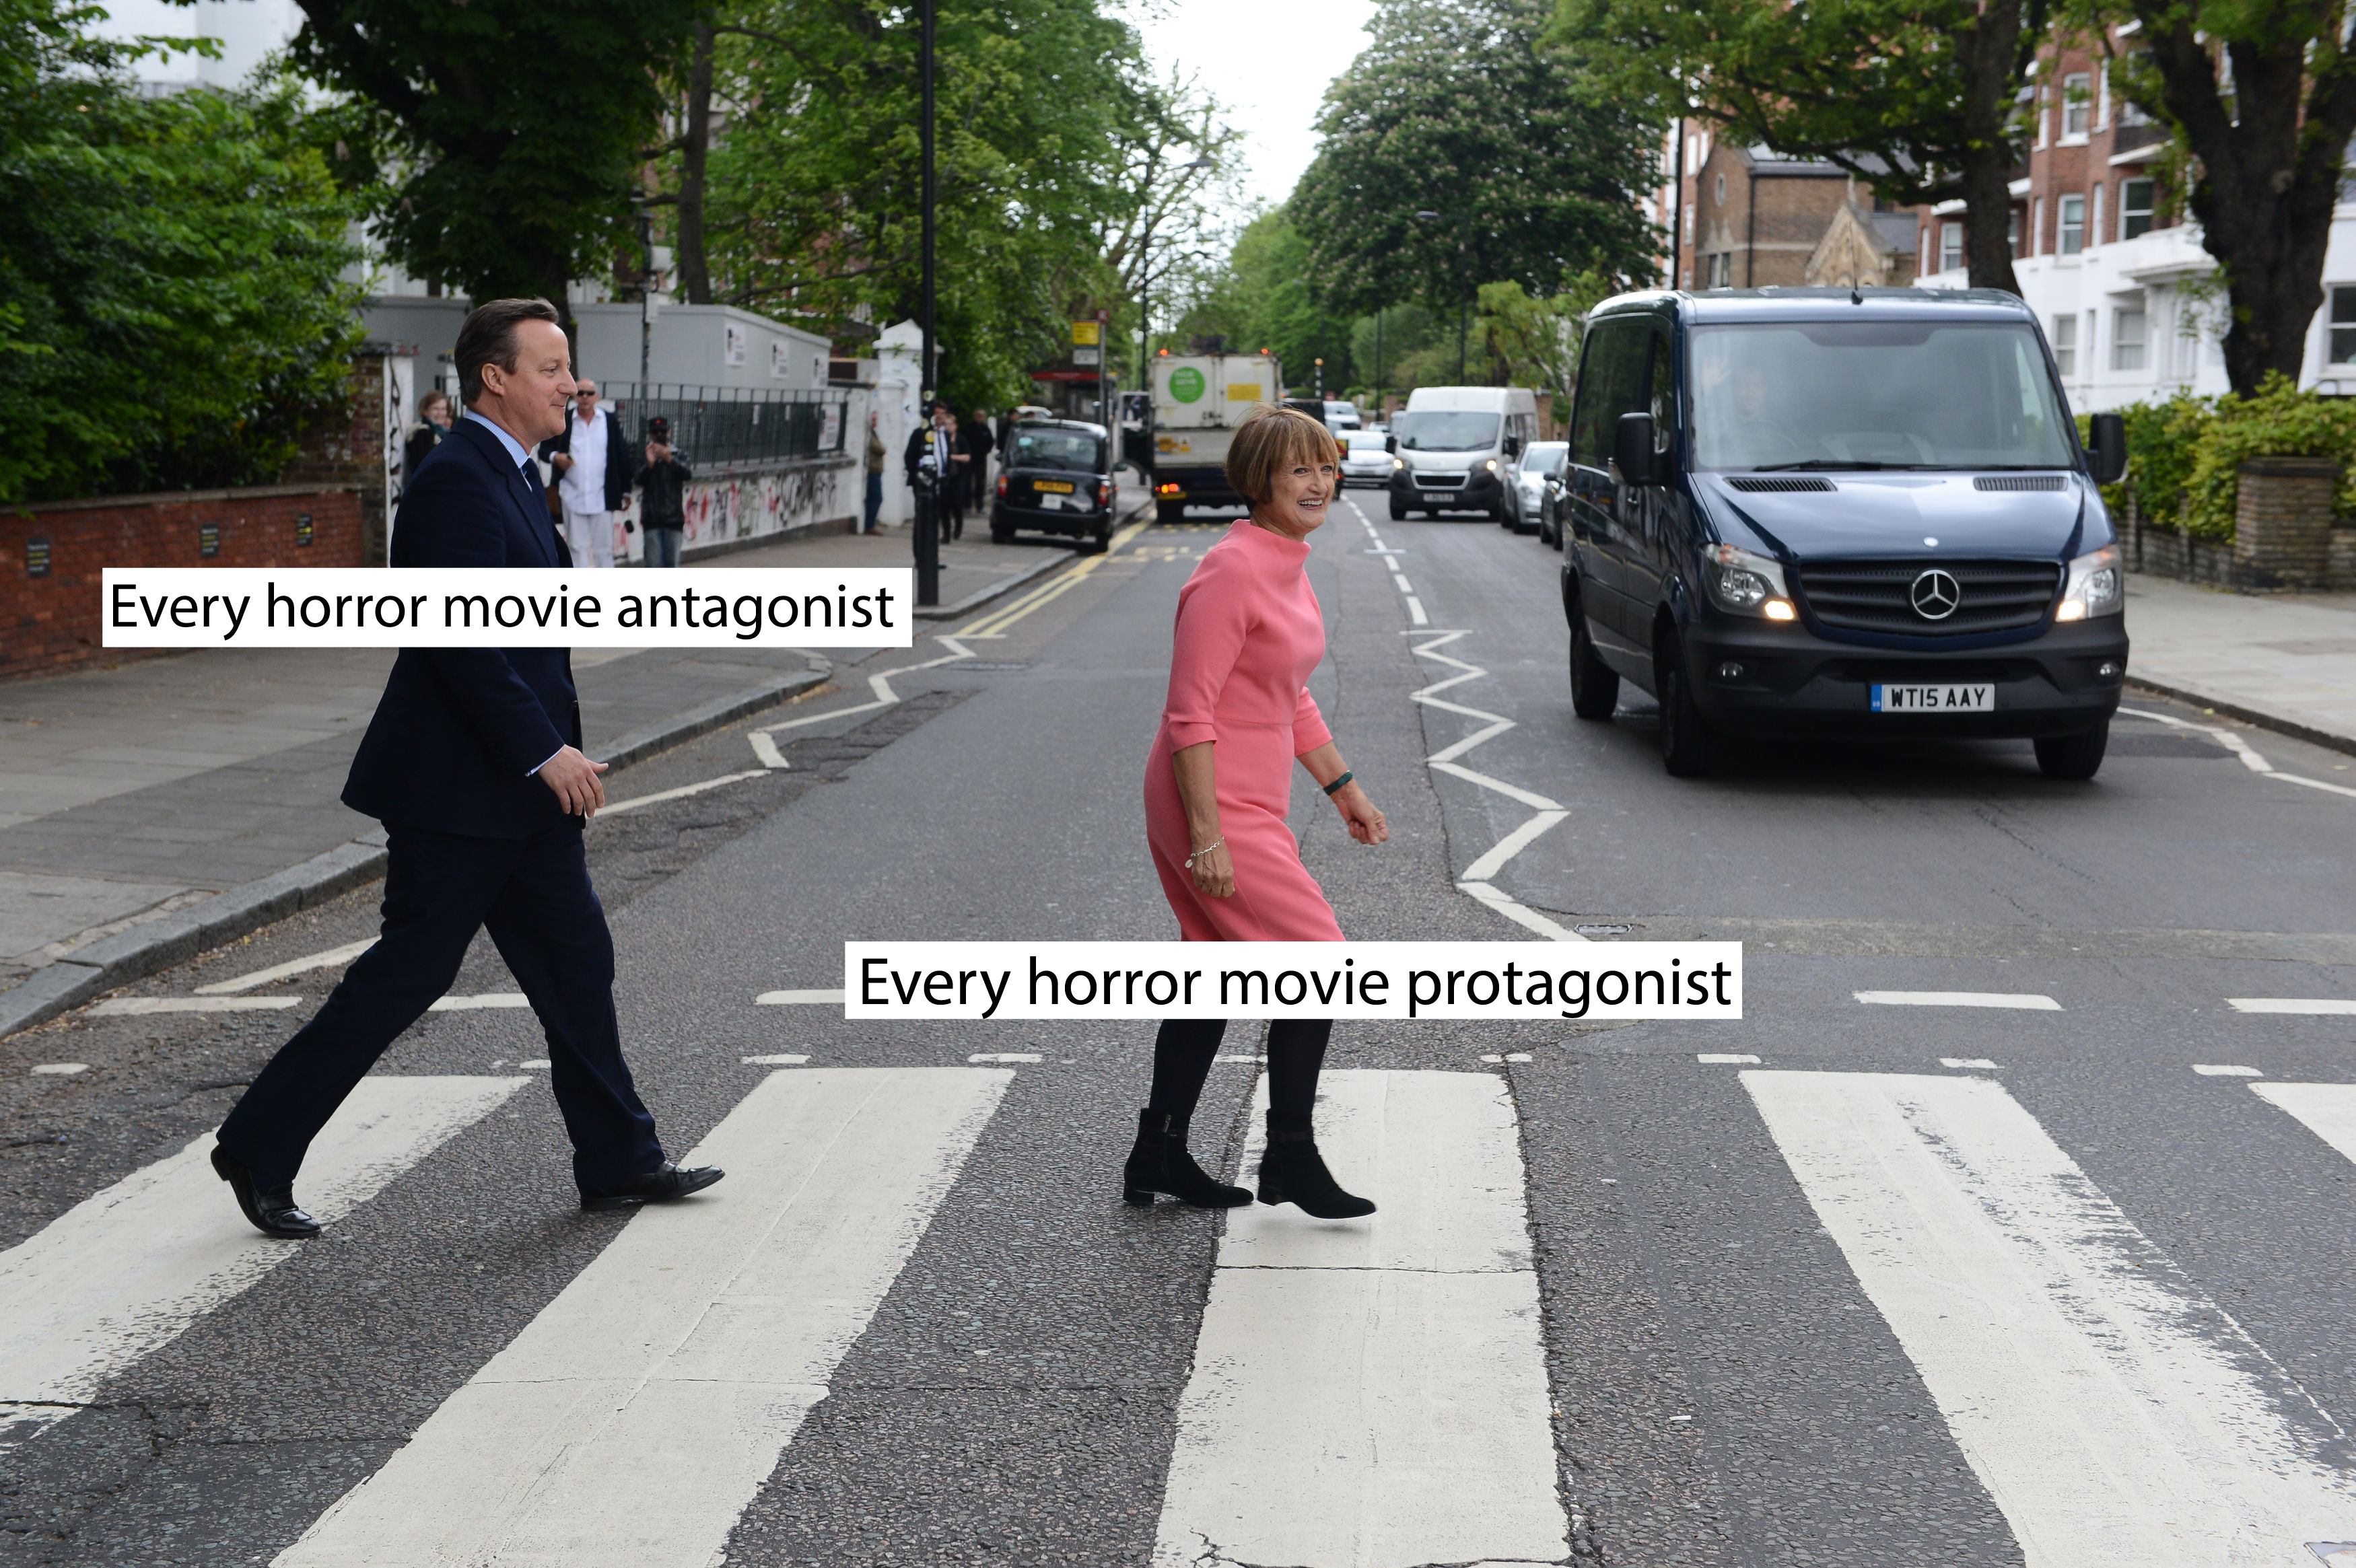 David Cameron walking on the street